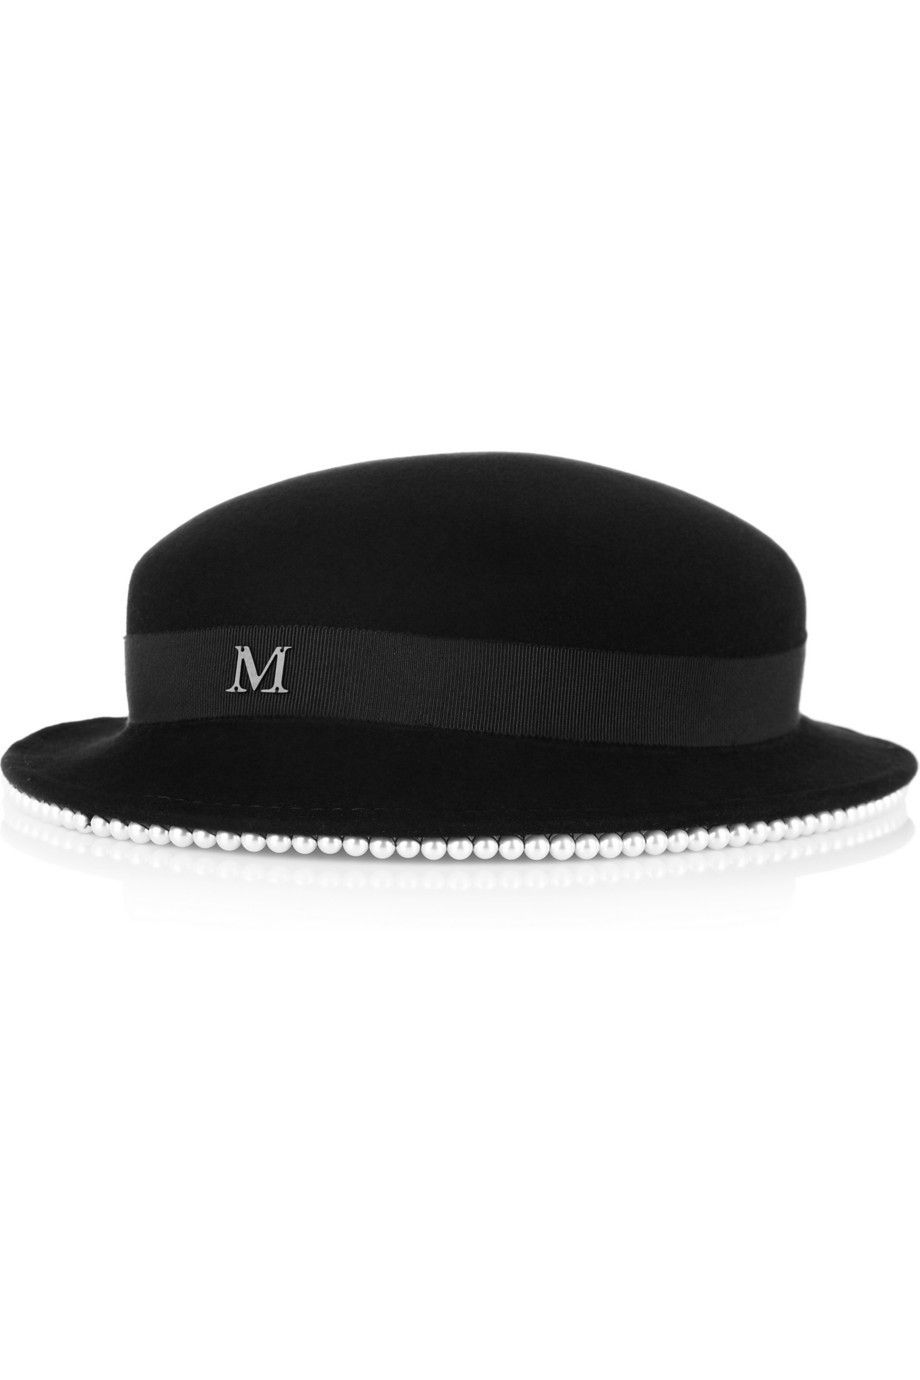 Headgear, Costume accessory, Black, Costume hat, Beige, Fedora, Peaked cap, 